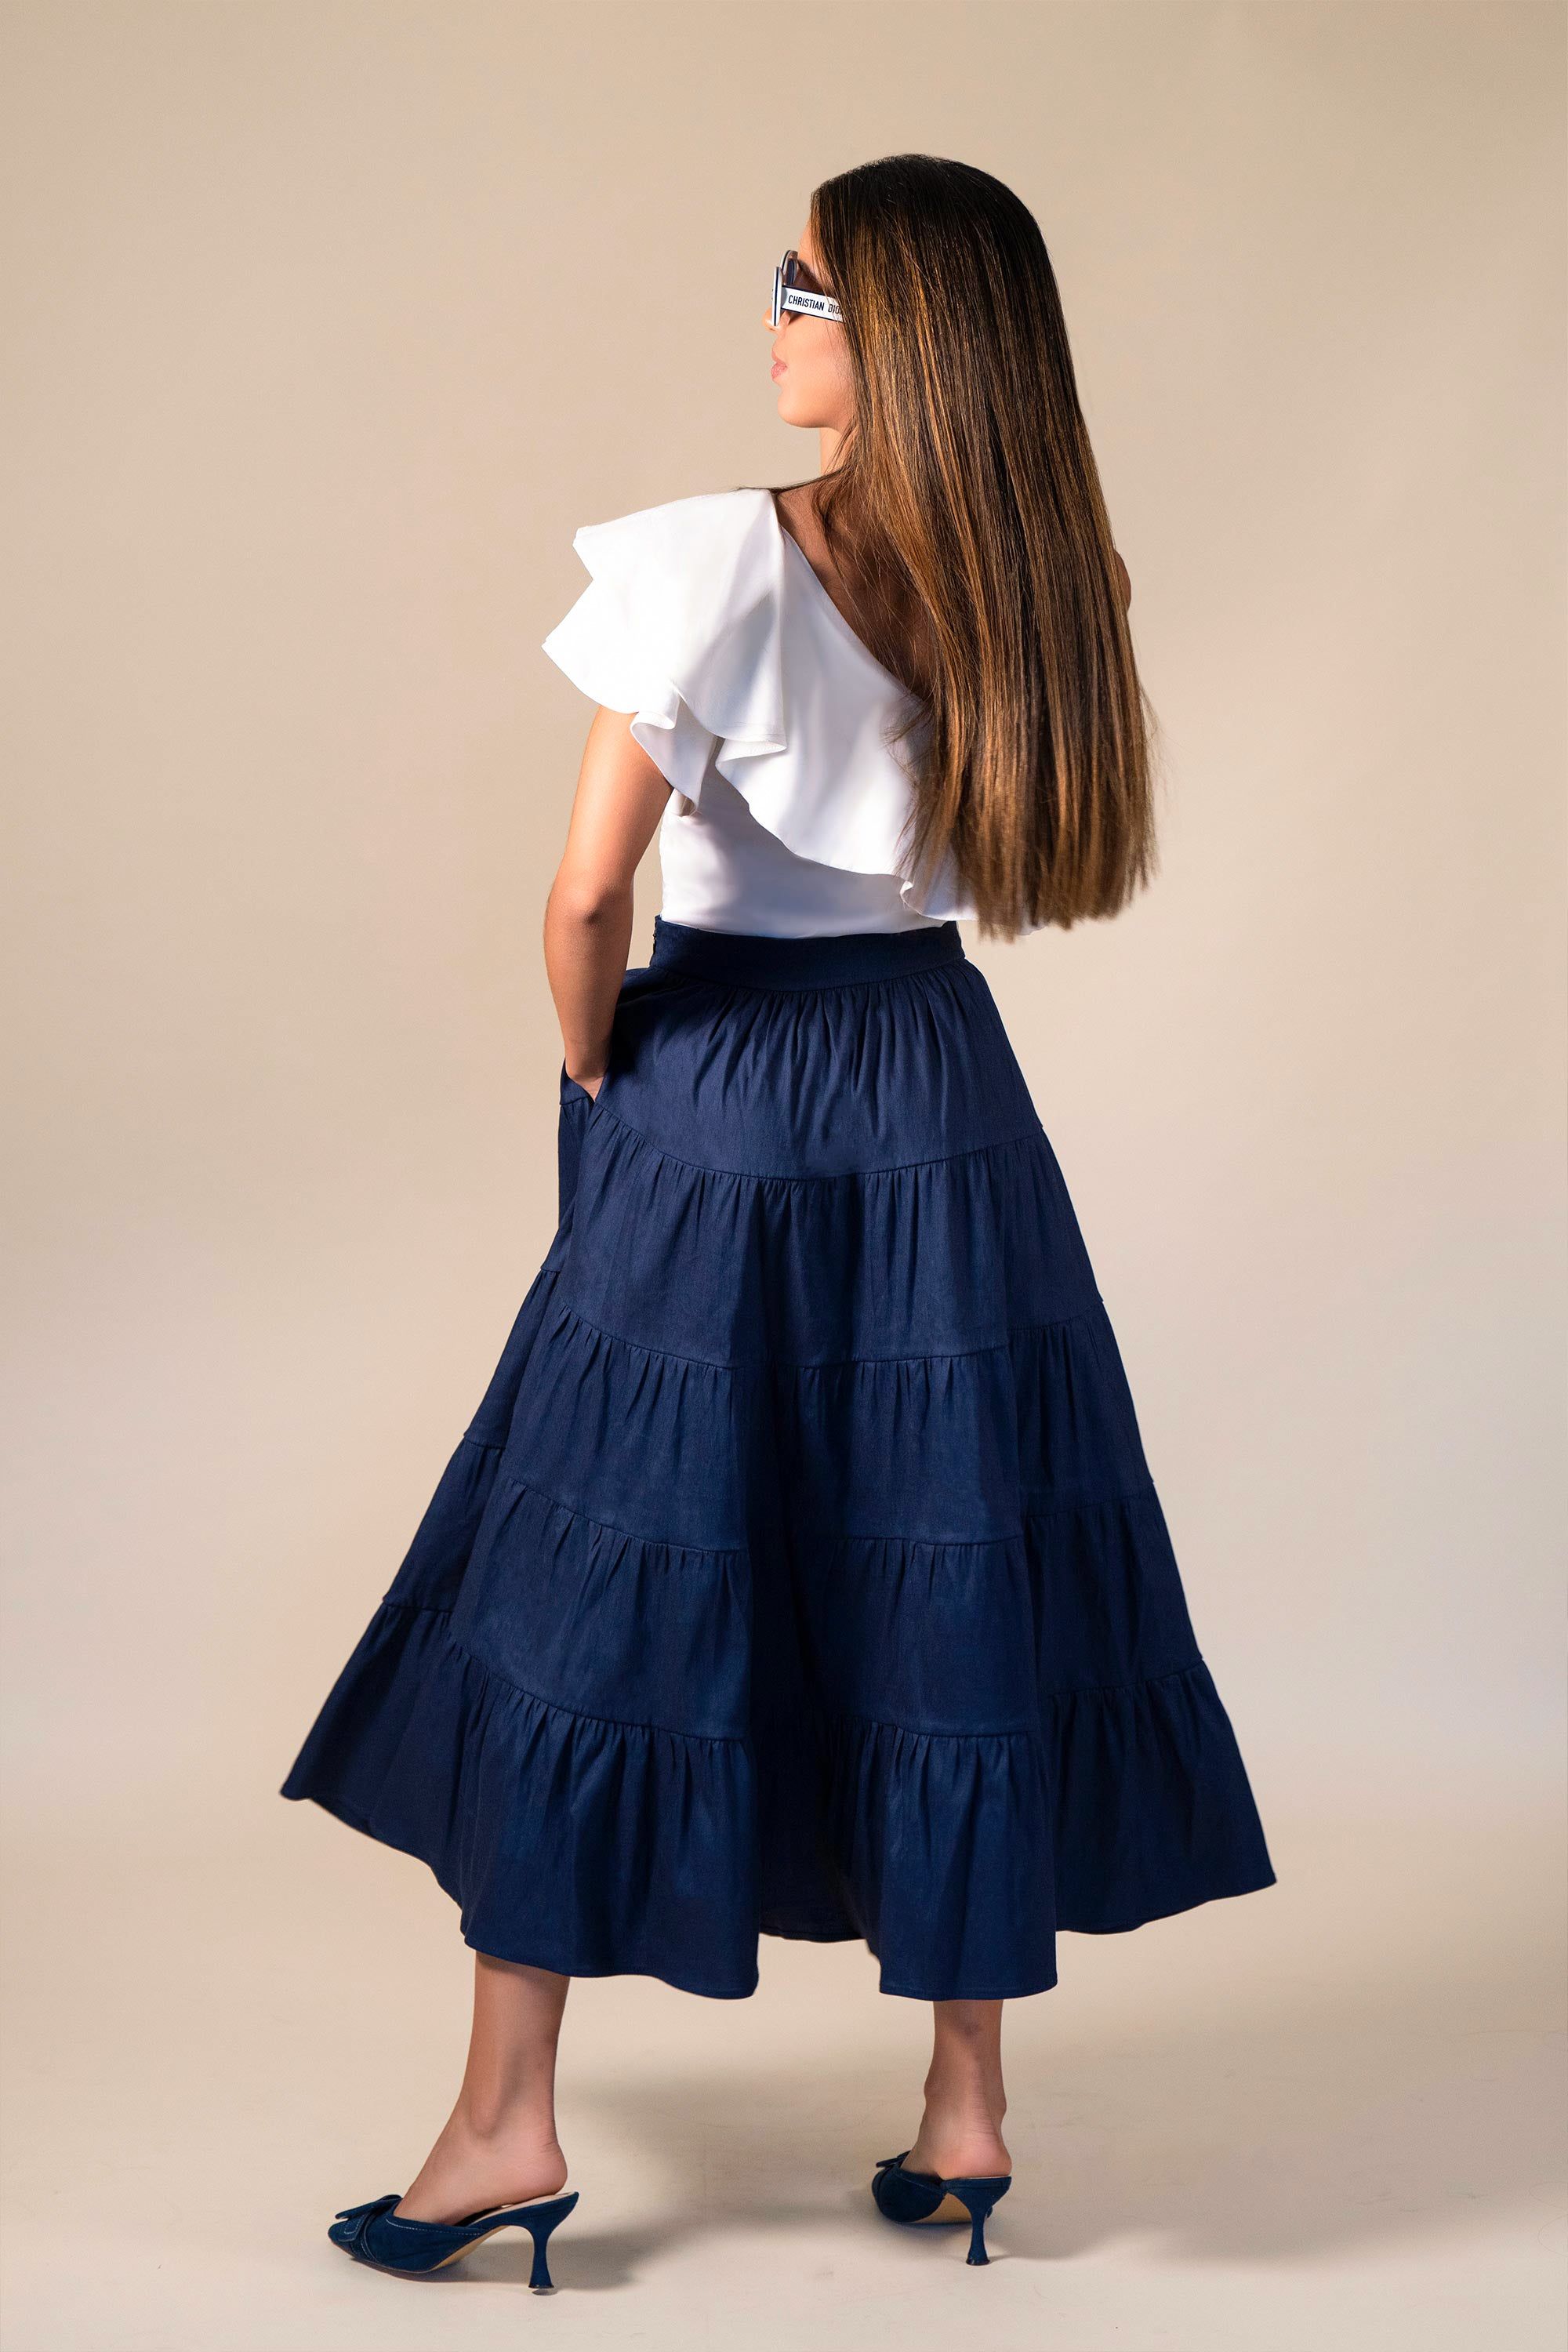 Angela Horton Women's Skirt Sz XS Bali Blue